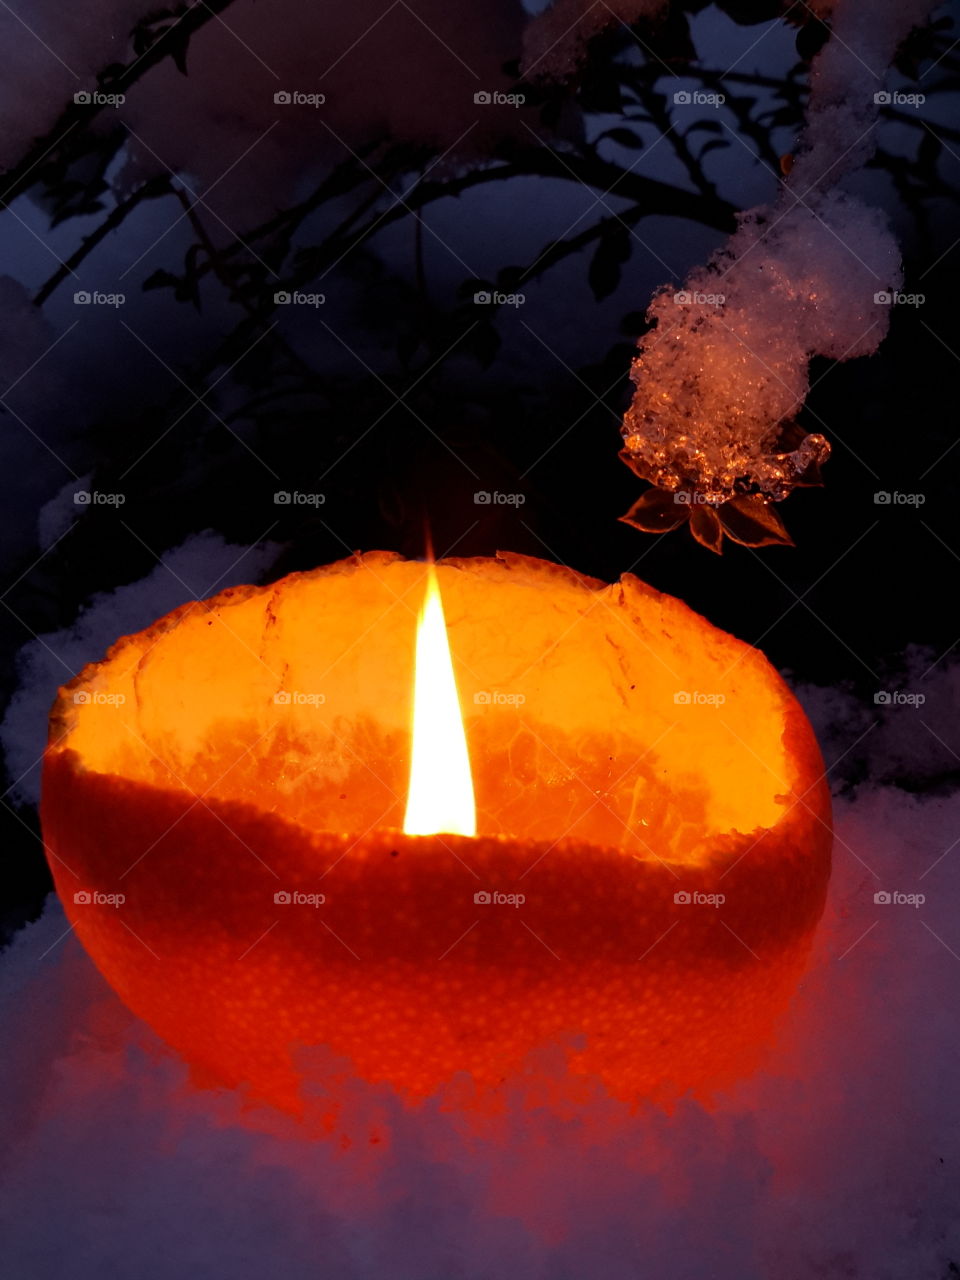 Burning candle in orange peel